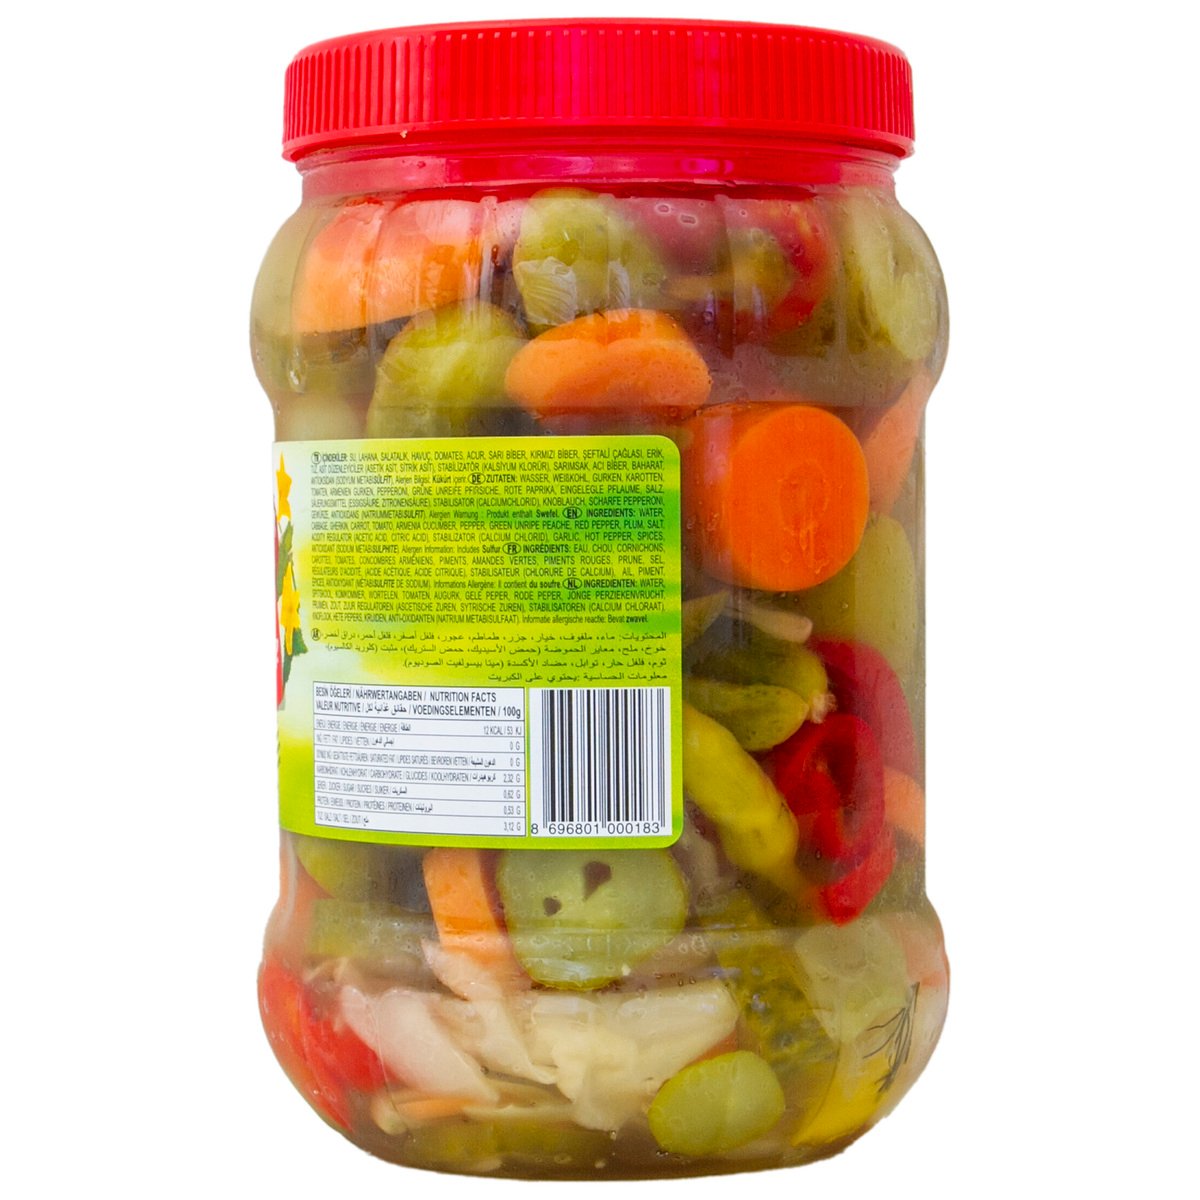 Cicek Mixed vegetable Pickle 700g